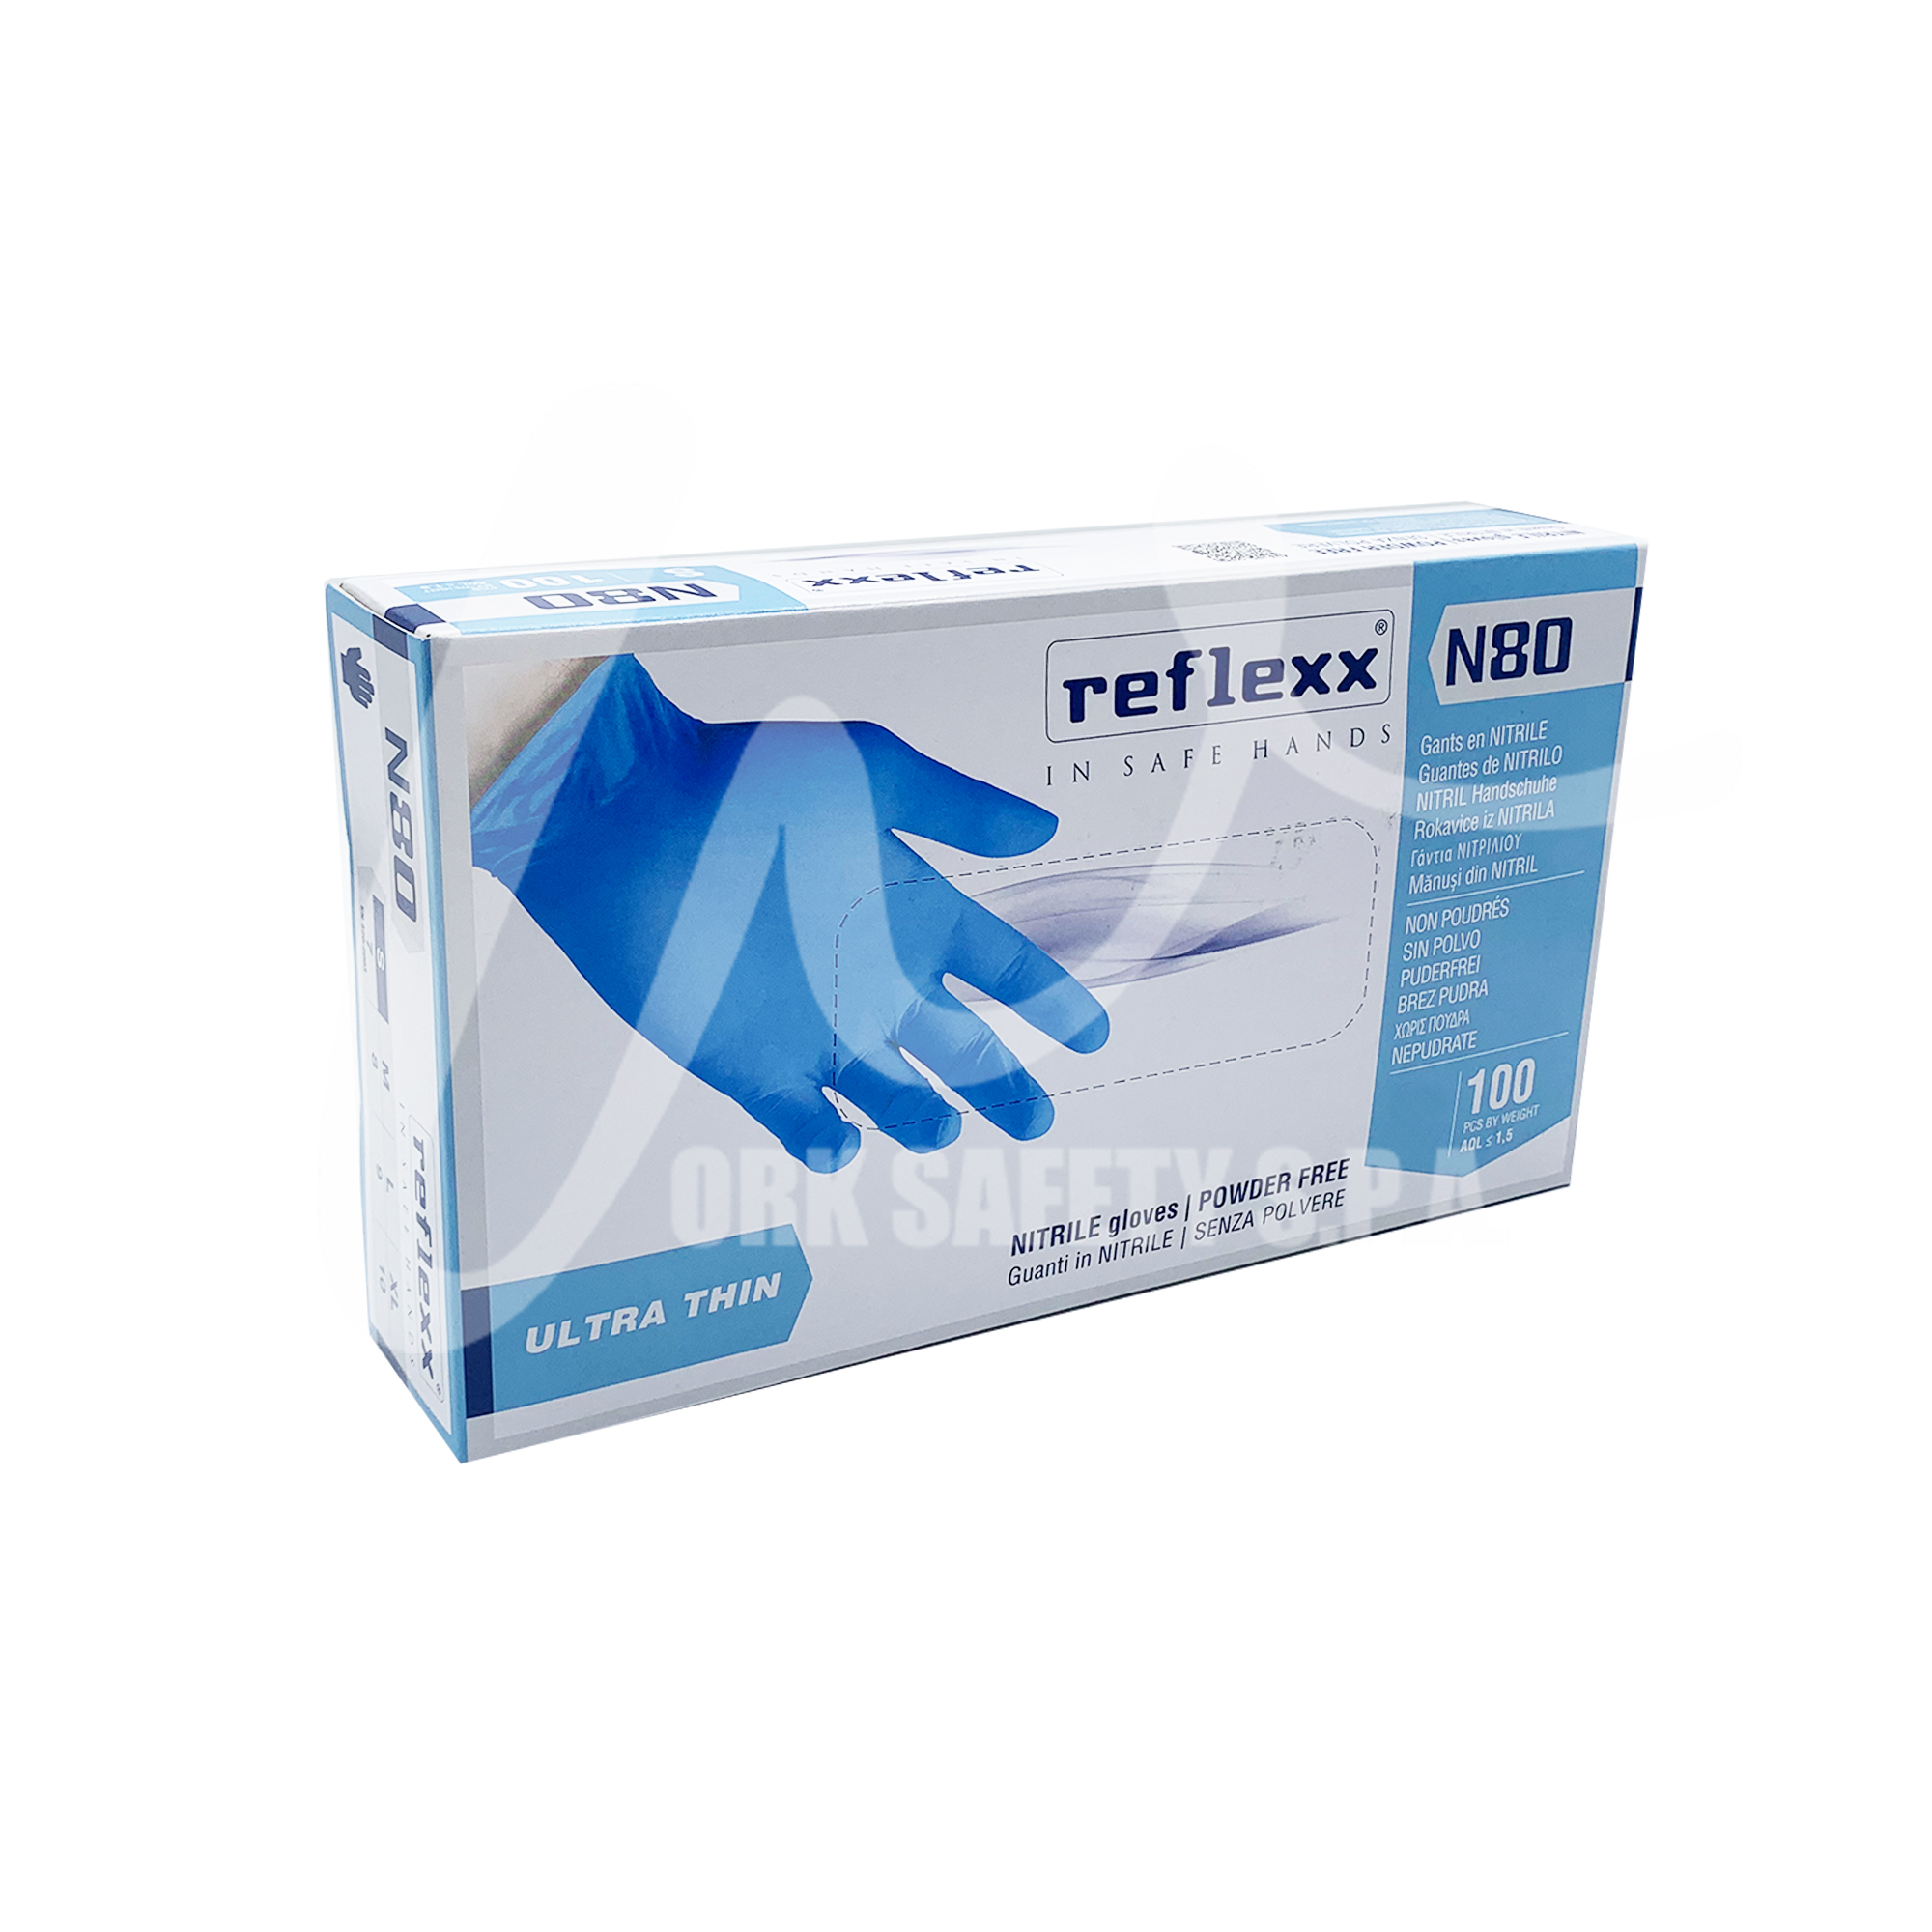 REFLEXX N80 - GUANTI IN NITRILE ULTRA THIN - Taglia XL